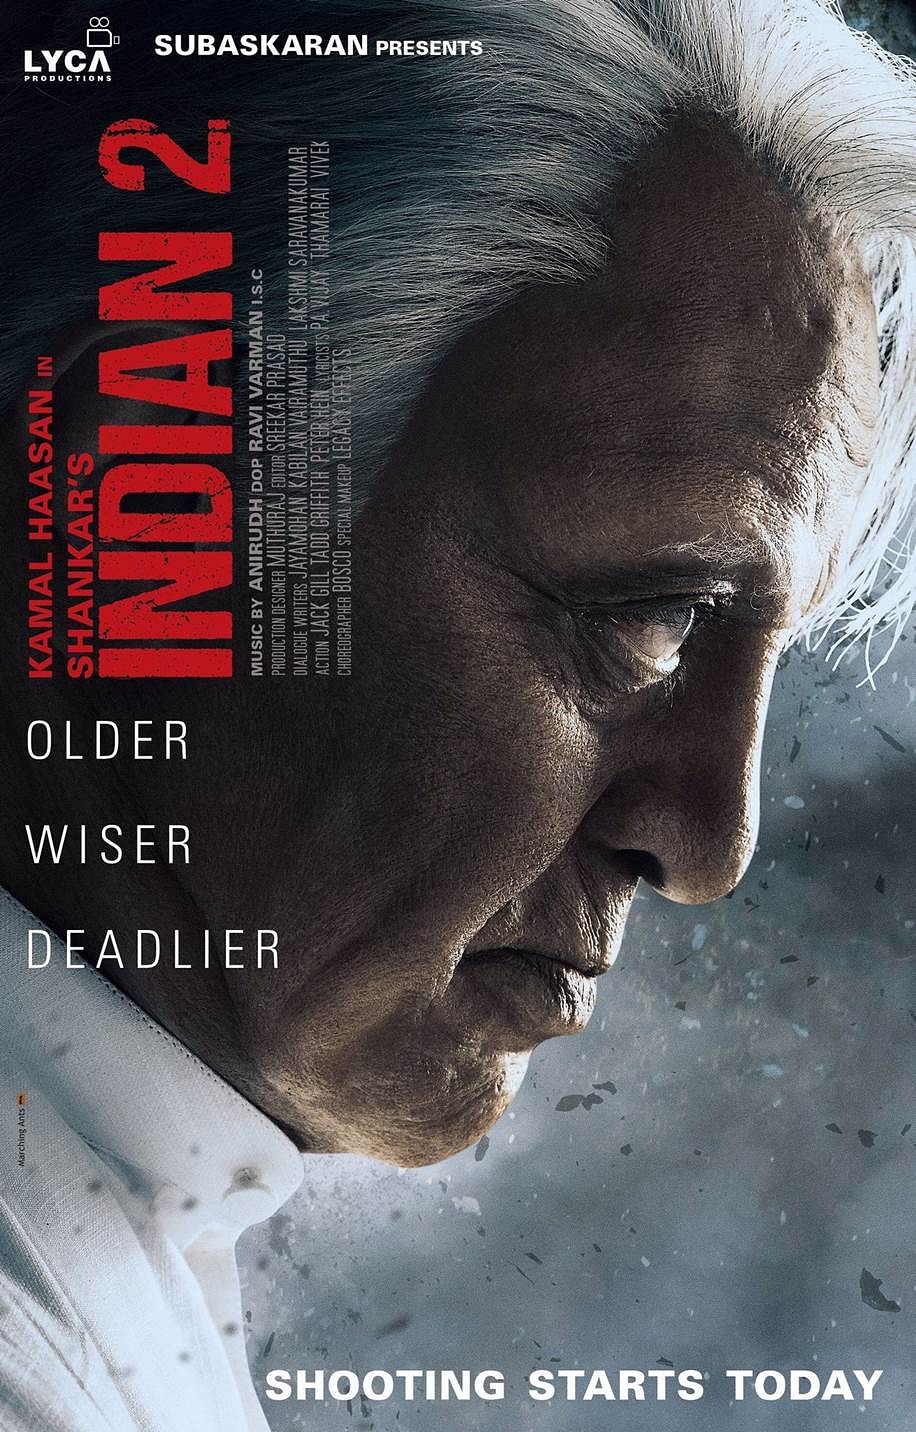 Kamal Haasan plays Senathipathi, the old man from the original ‘Indian’, again.